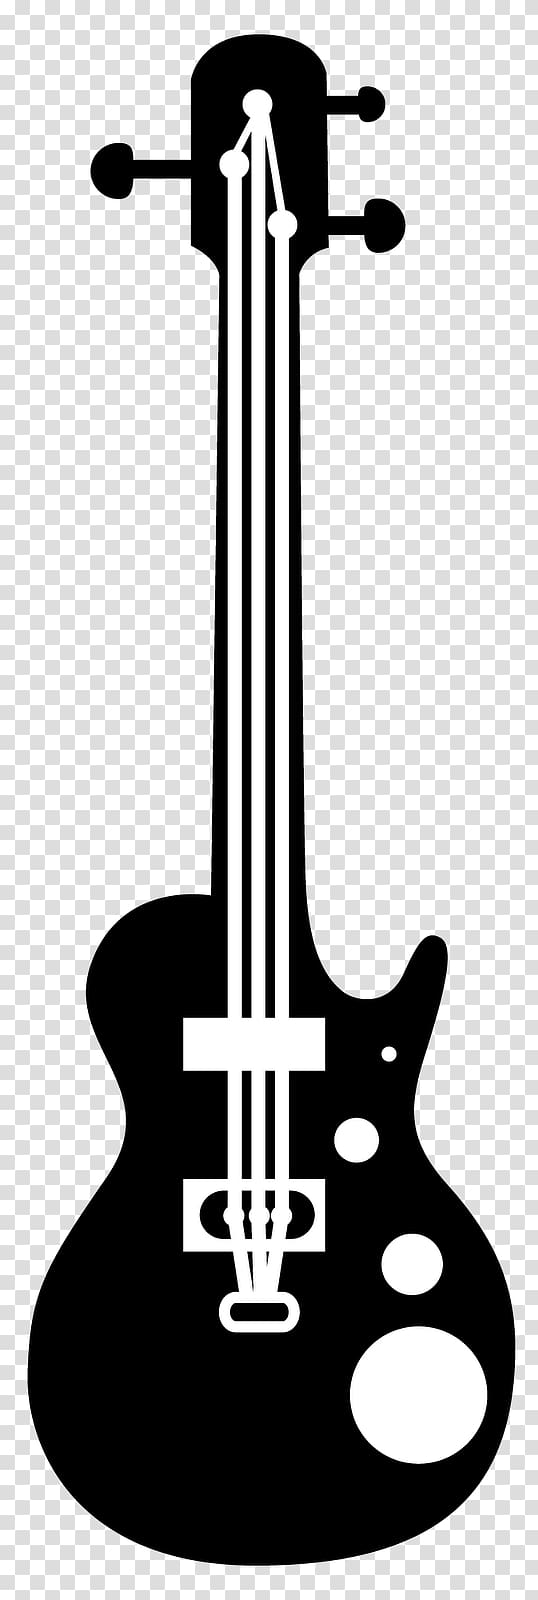 Art Bass guitar Black and white, Bass Guitar transparent background PNG clipart